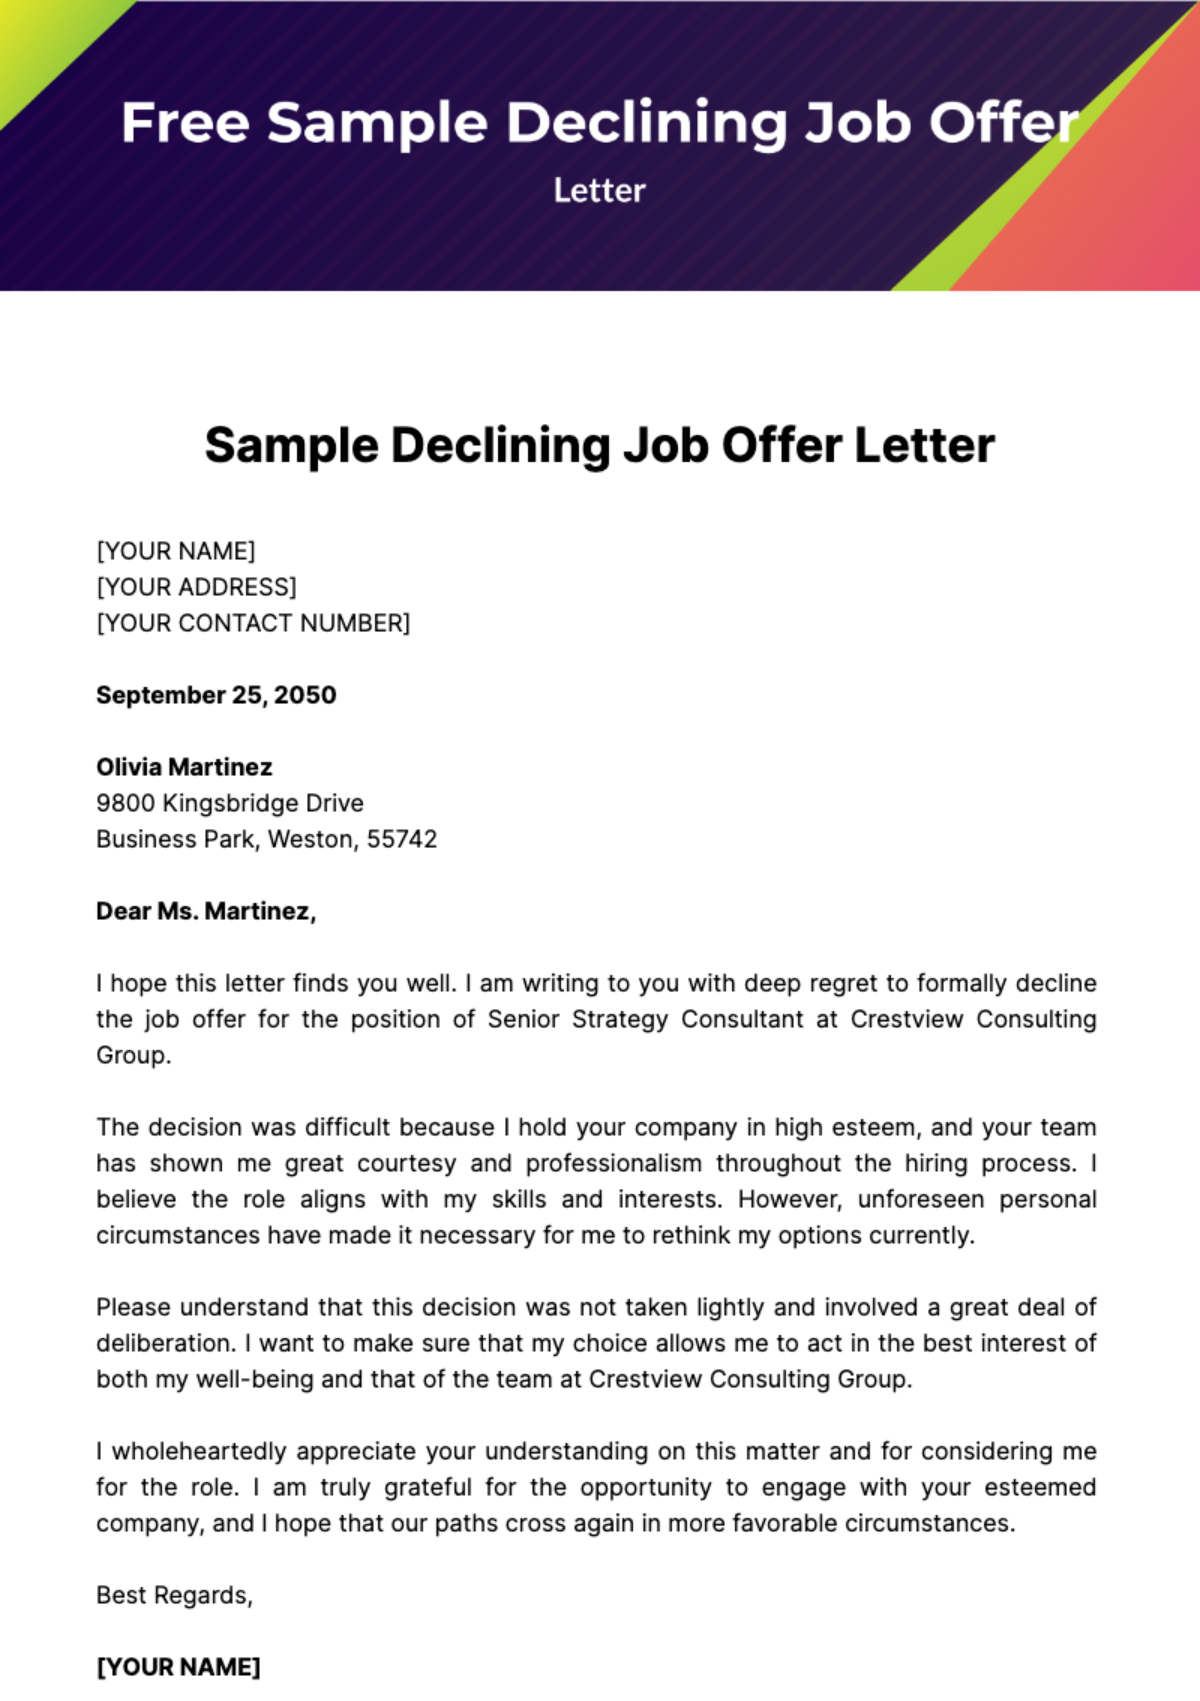 Free Sample Declining Job Offer Letter Template